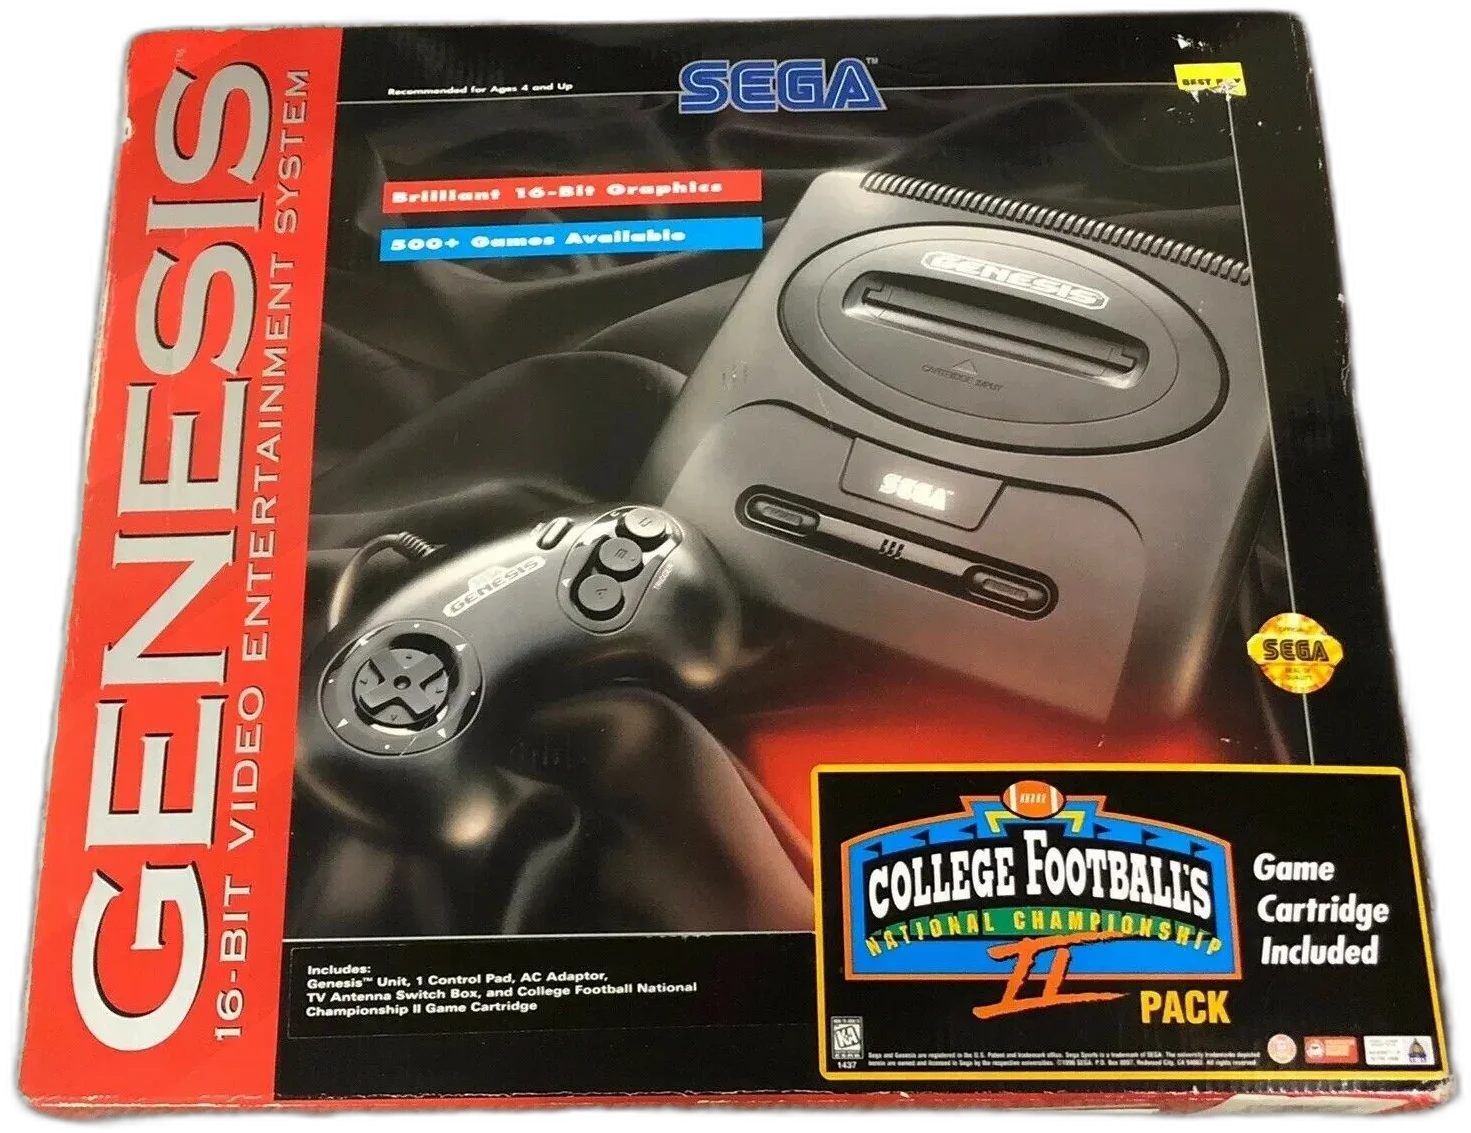  Sega Genesis Model 2 College Football&#039;s National Championship II Pack